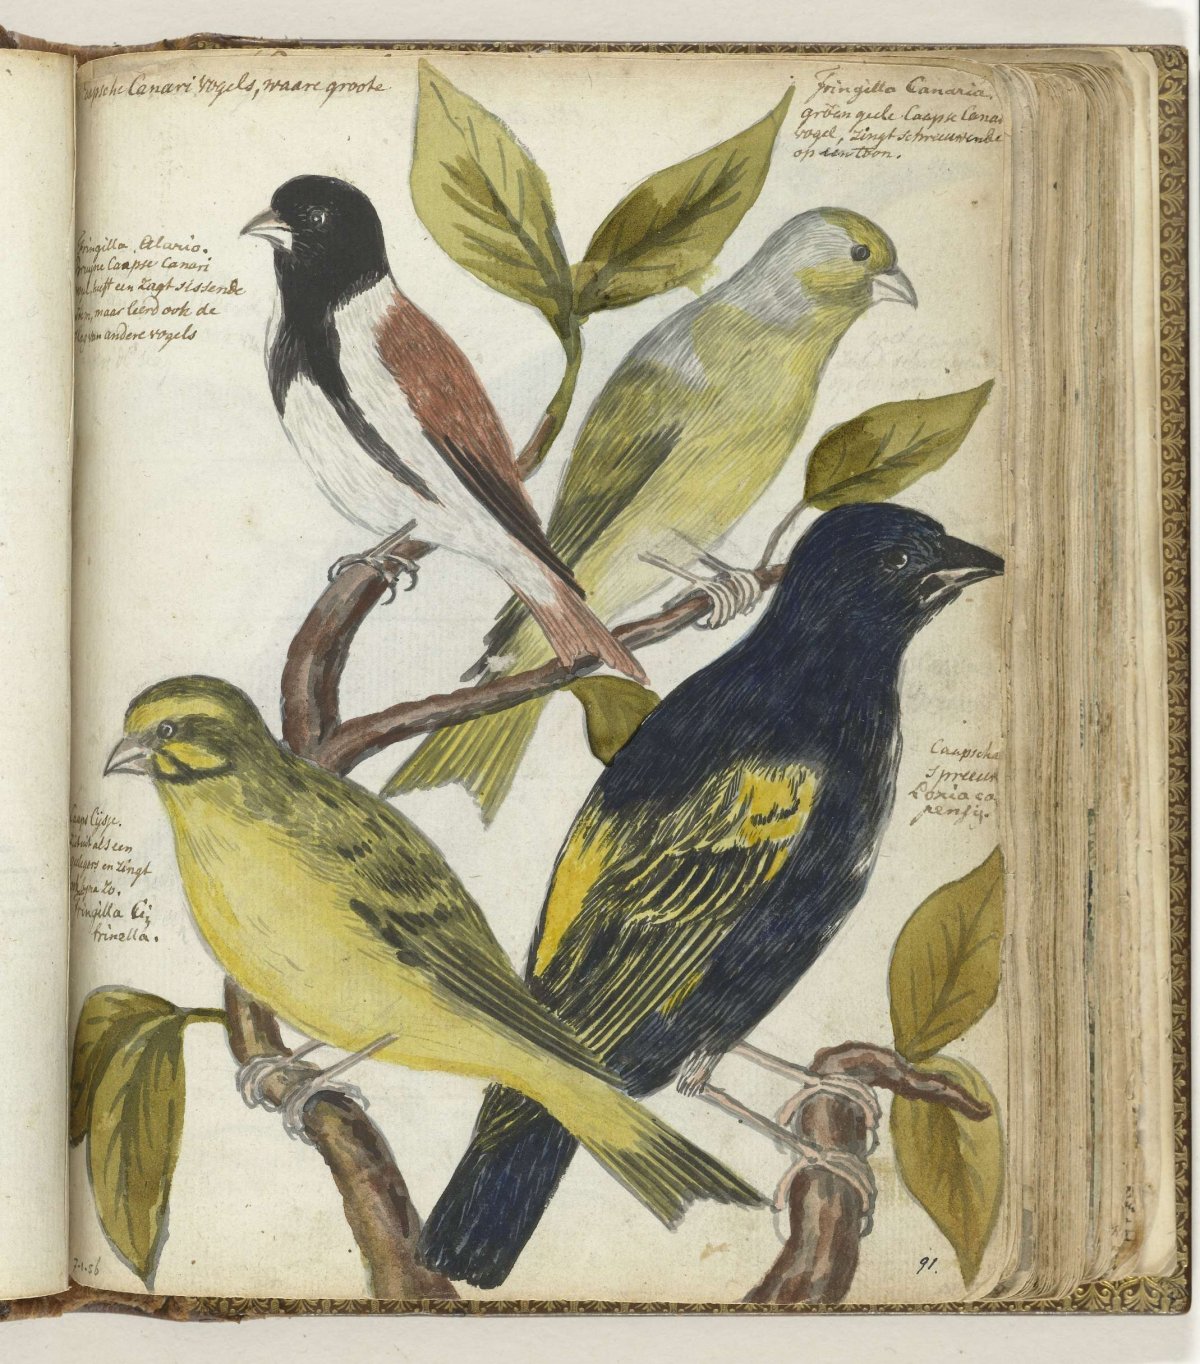 Cape Birds, Jan Brandes, 1786 - 1787